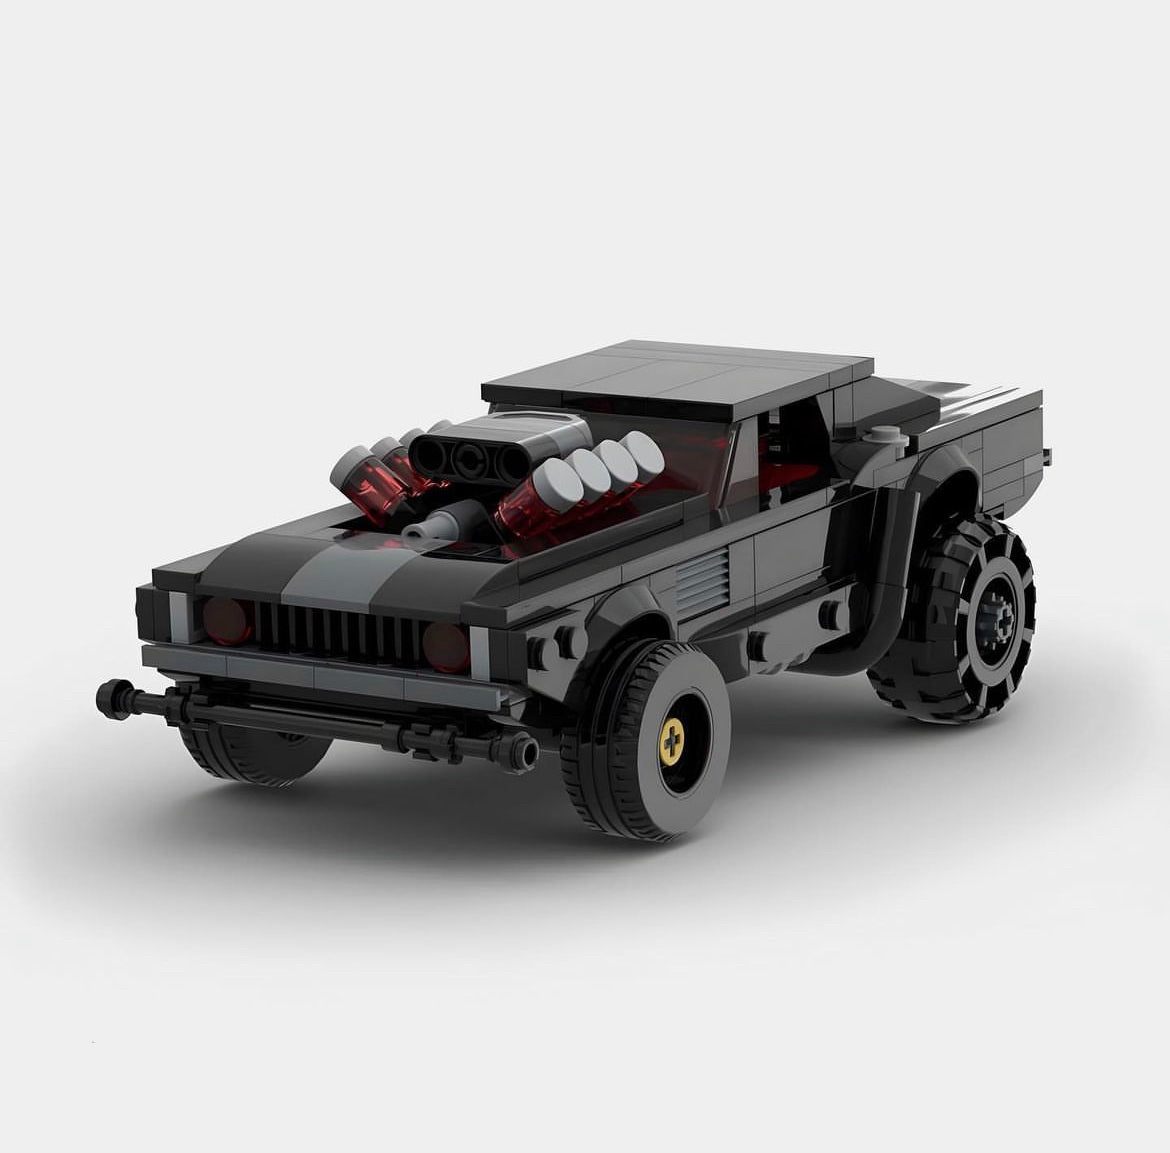 Cyberpunk Dodge Challenger made from lego building blocks